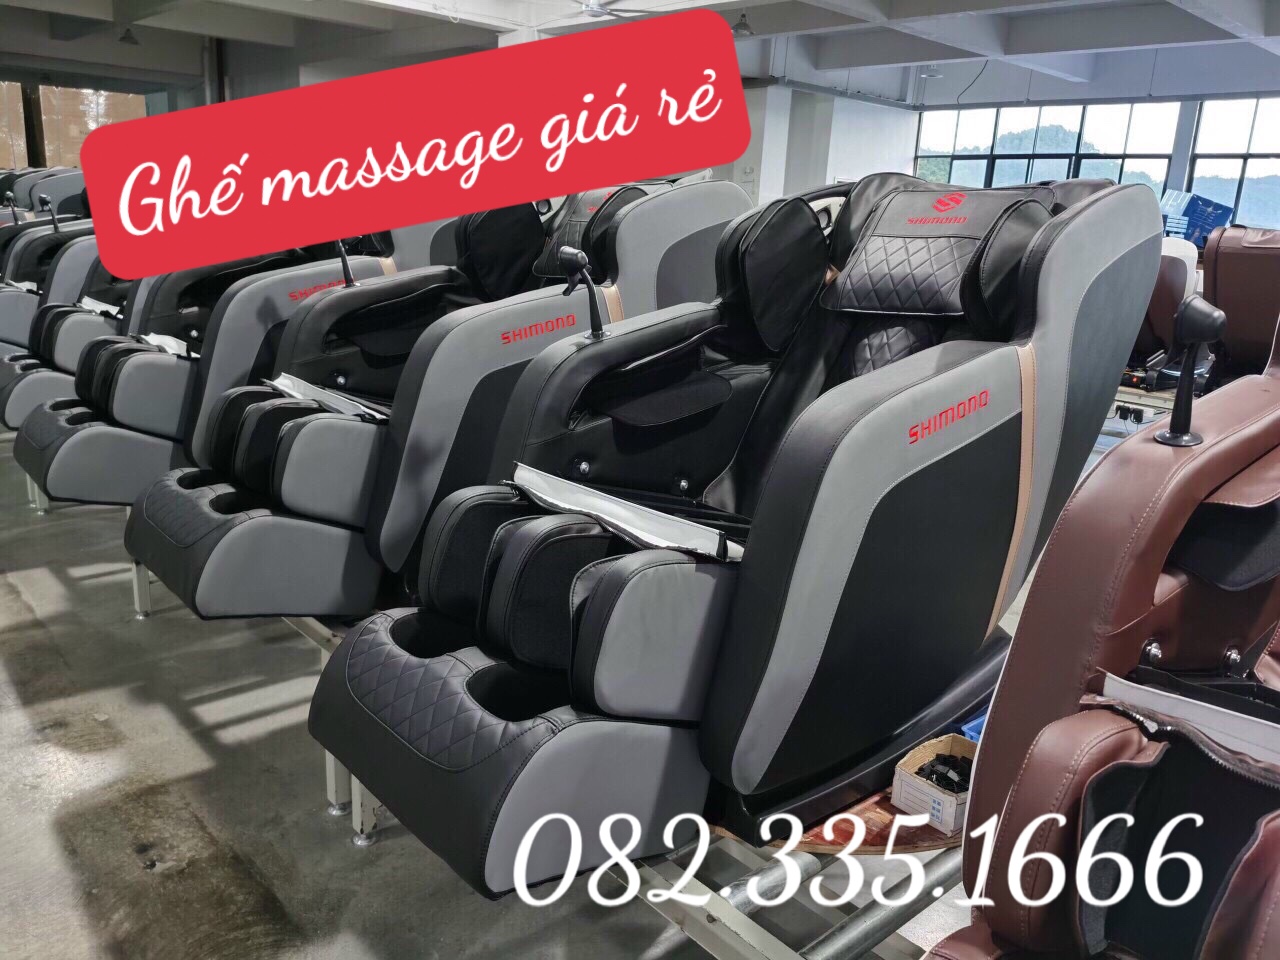 Ghế massage giá rẻ